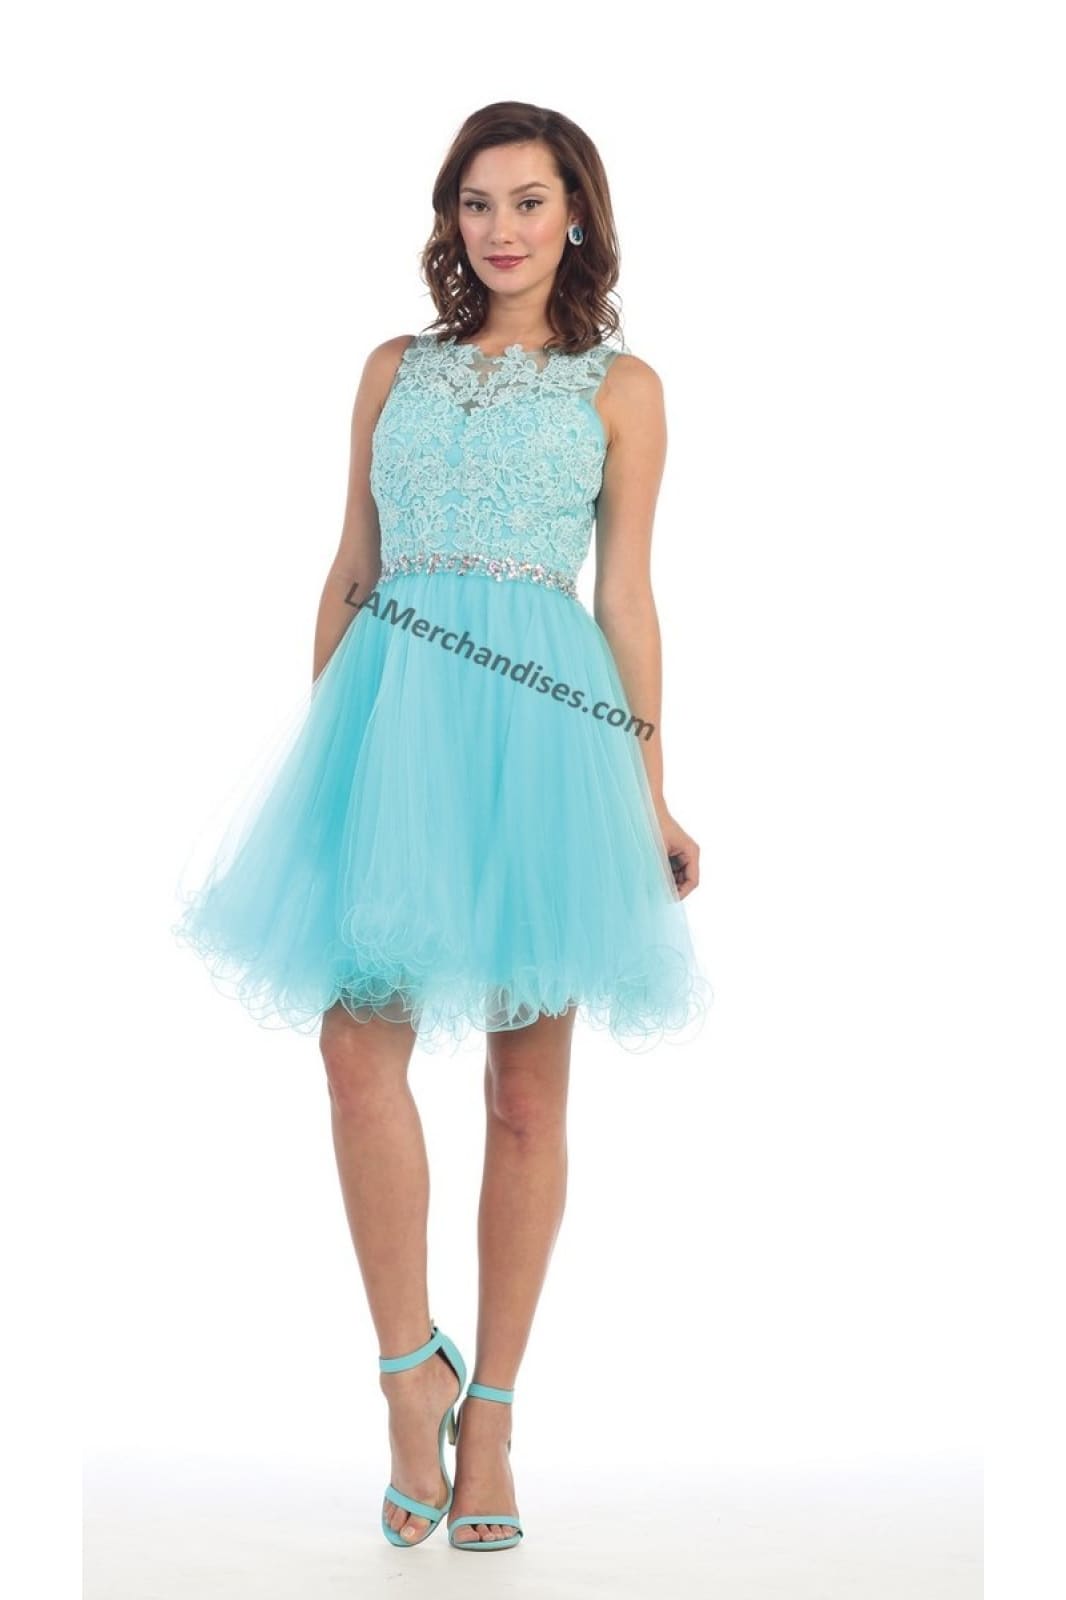 Sleeveless lace applique mesh sassy short dress- LA1280 - Aqua - LA Merchandise